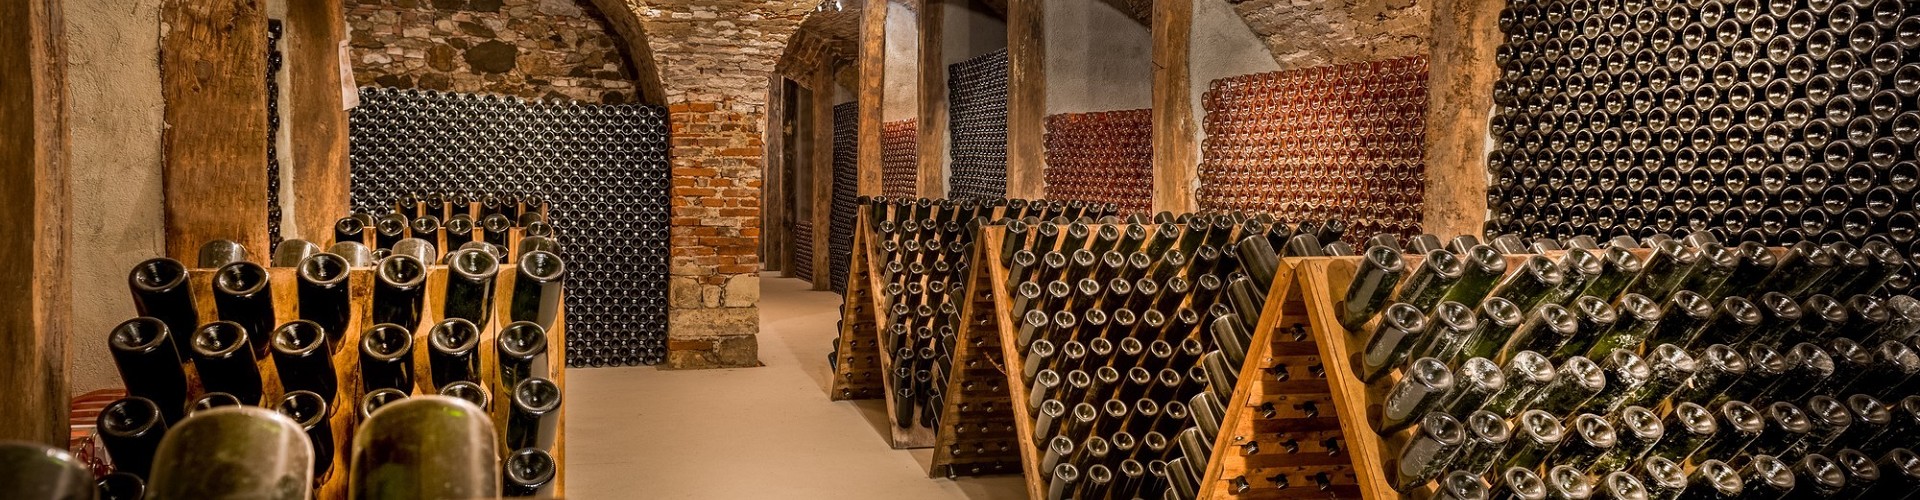 Piedmont Wine Tours from Genoa | Piedmont Wine Tours from Turin | Alba Wine tours